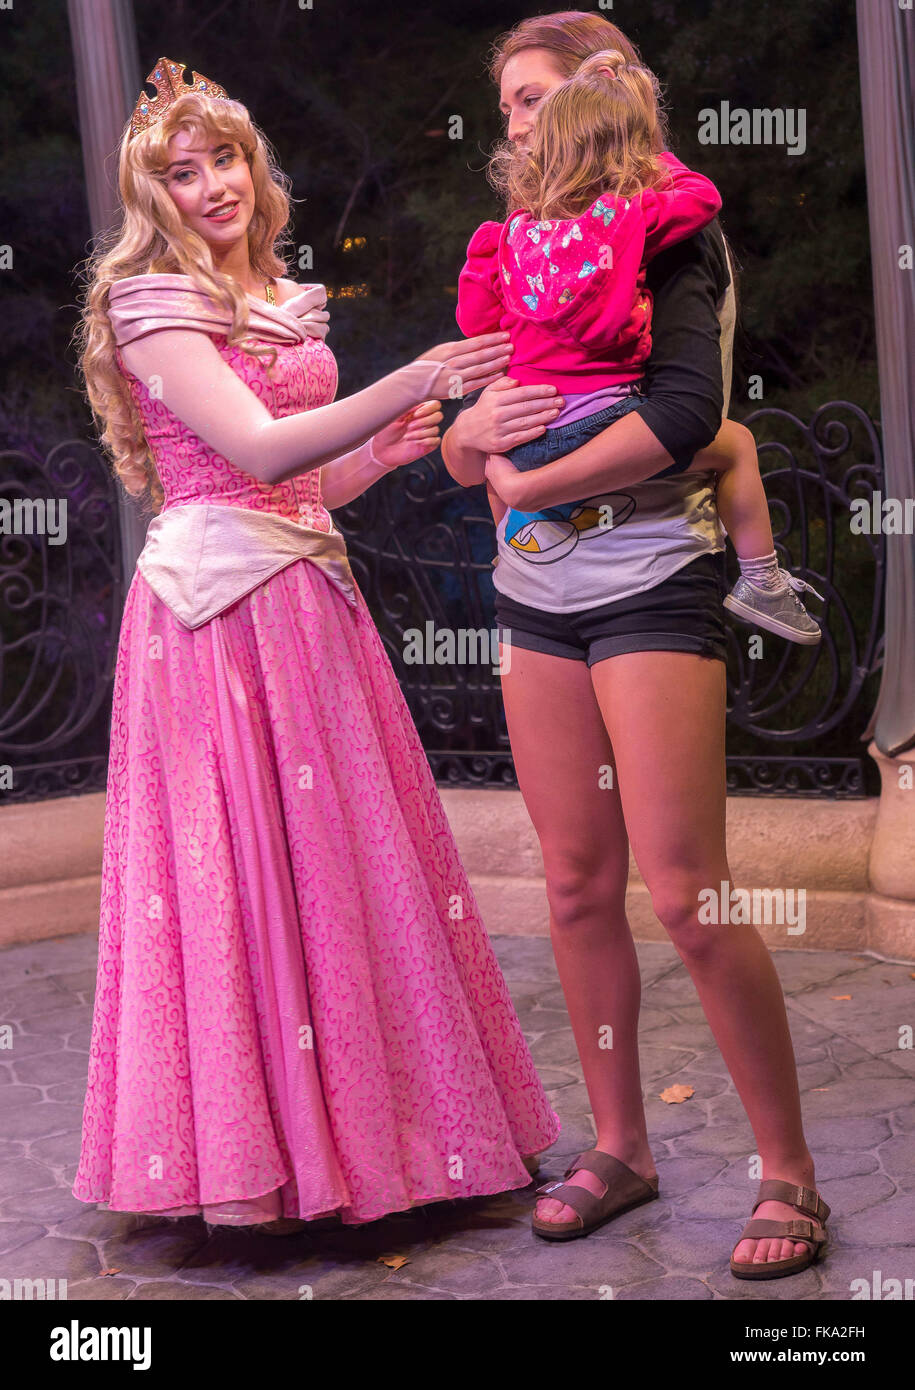 February 1, 2016 - Orlando, FL, U.S - Princess Aurora poses with fans at Epcot at Disney World in Orlando, Florida. (Credit Image: © Alexis Simpson via ZUMA Wire) Stock Photo